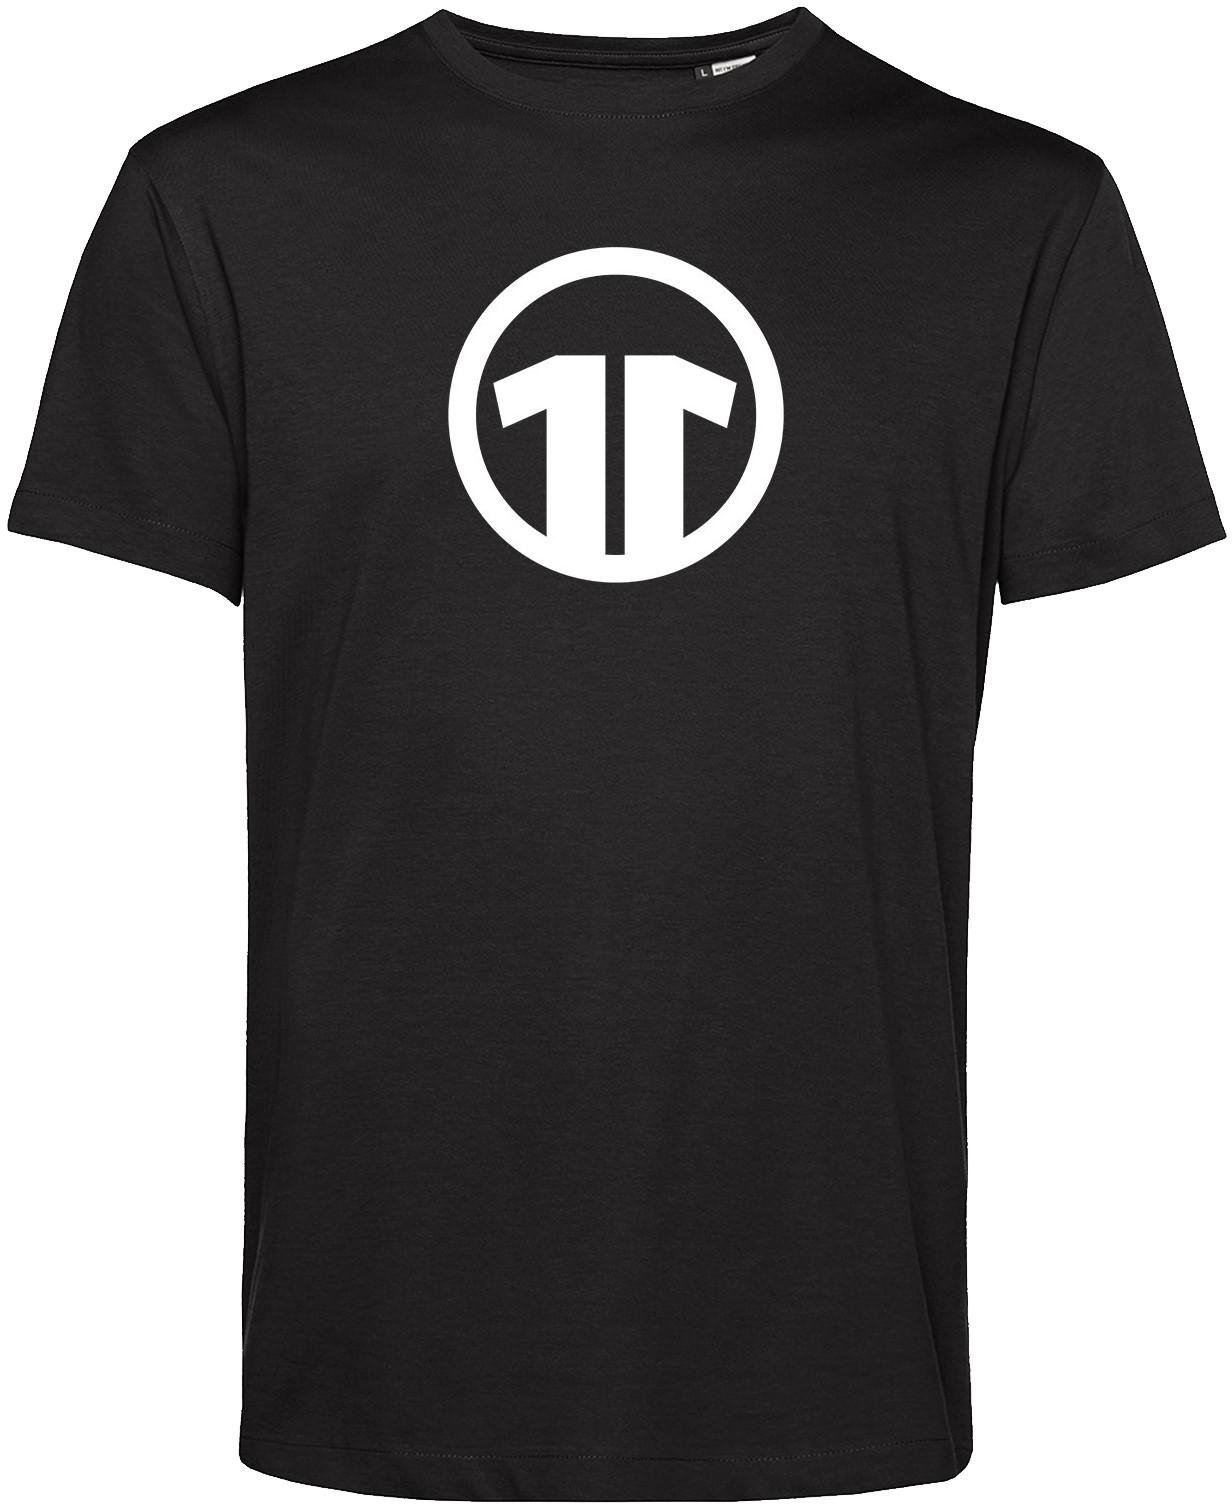 Camiseta 11teamsports Classic T-Shirt Black White